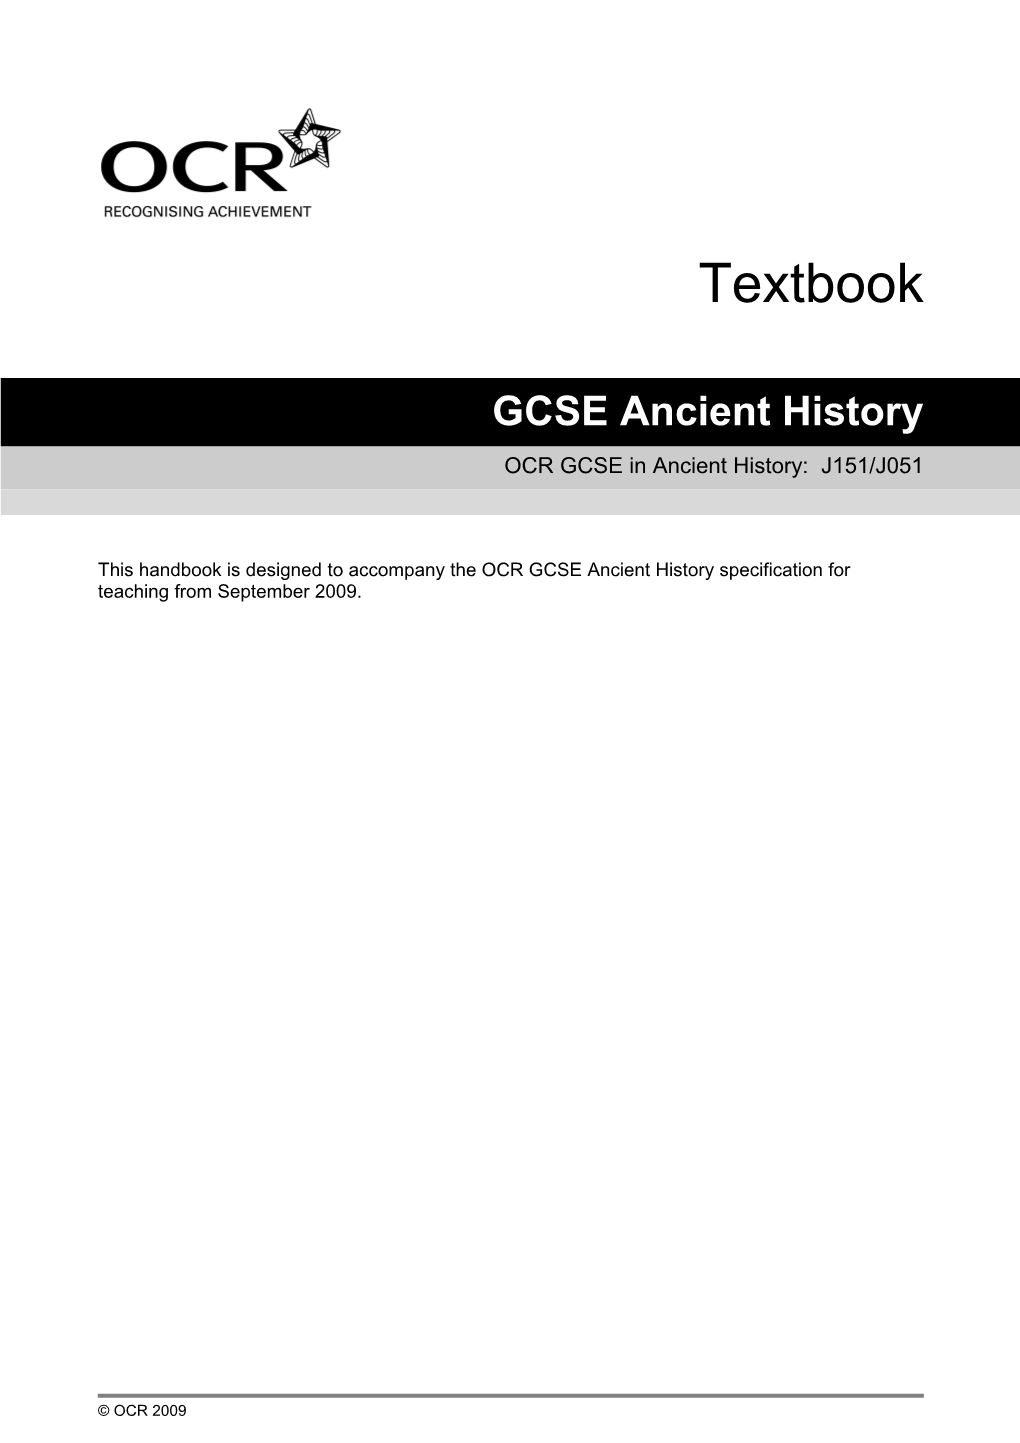 OCR GCSE in Ancient History: J151/J051